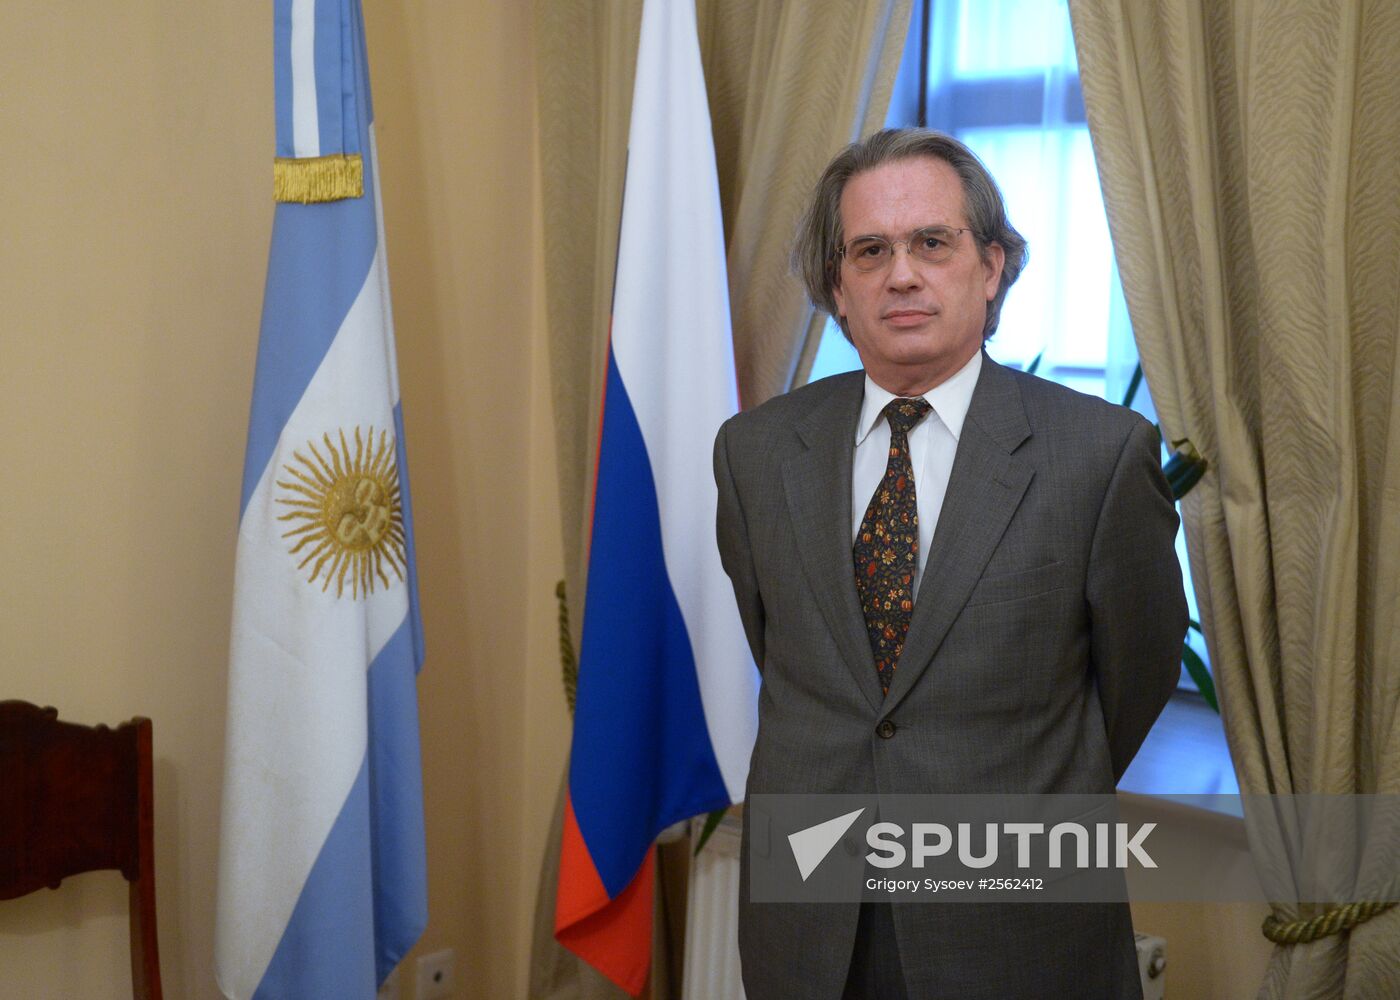 Argentine Ambassador to Russia Pablo Tettamanti